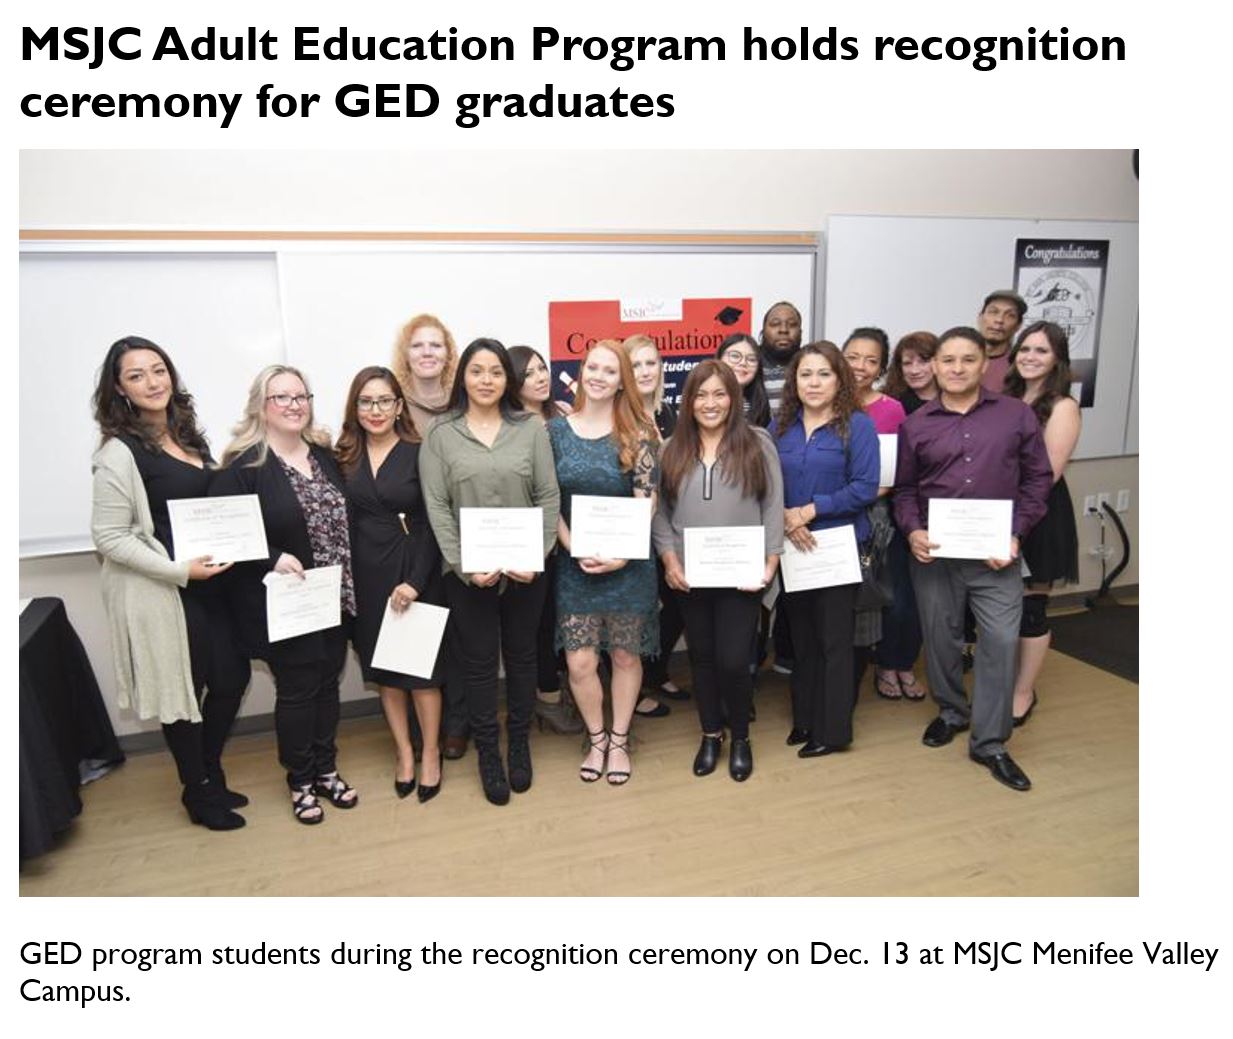 MSJC Aduld Ed Program Recognition for GED Graduates